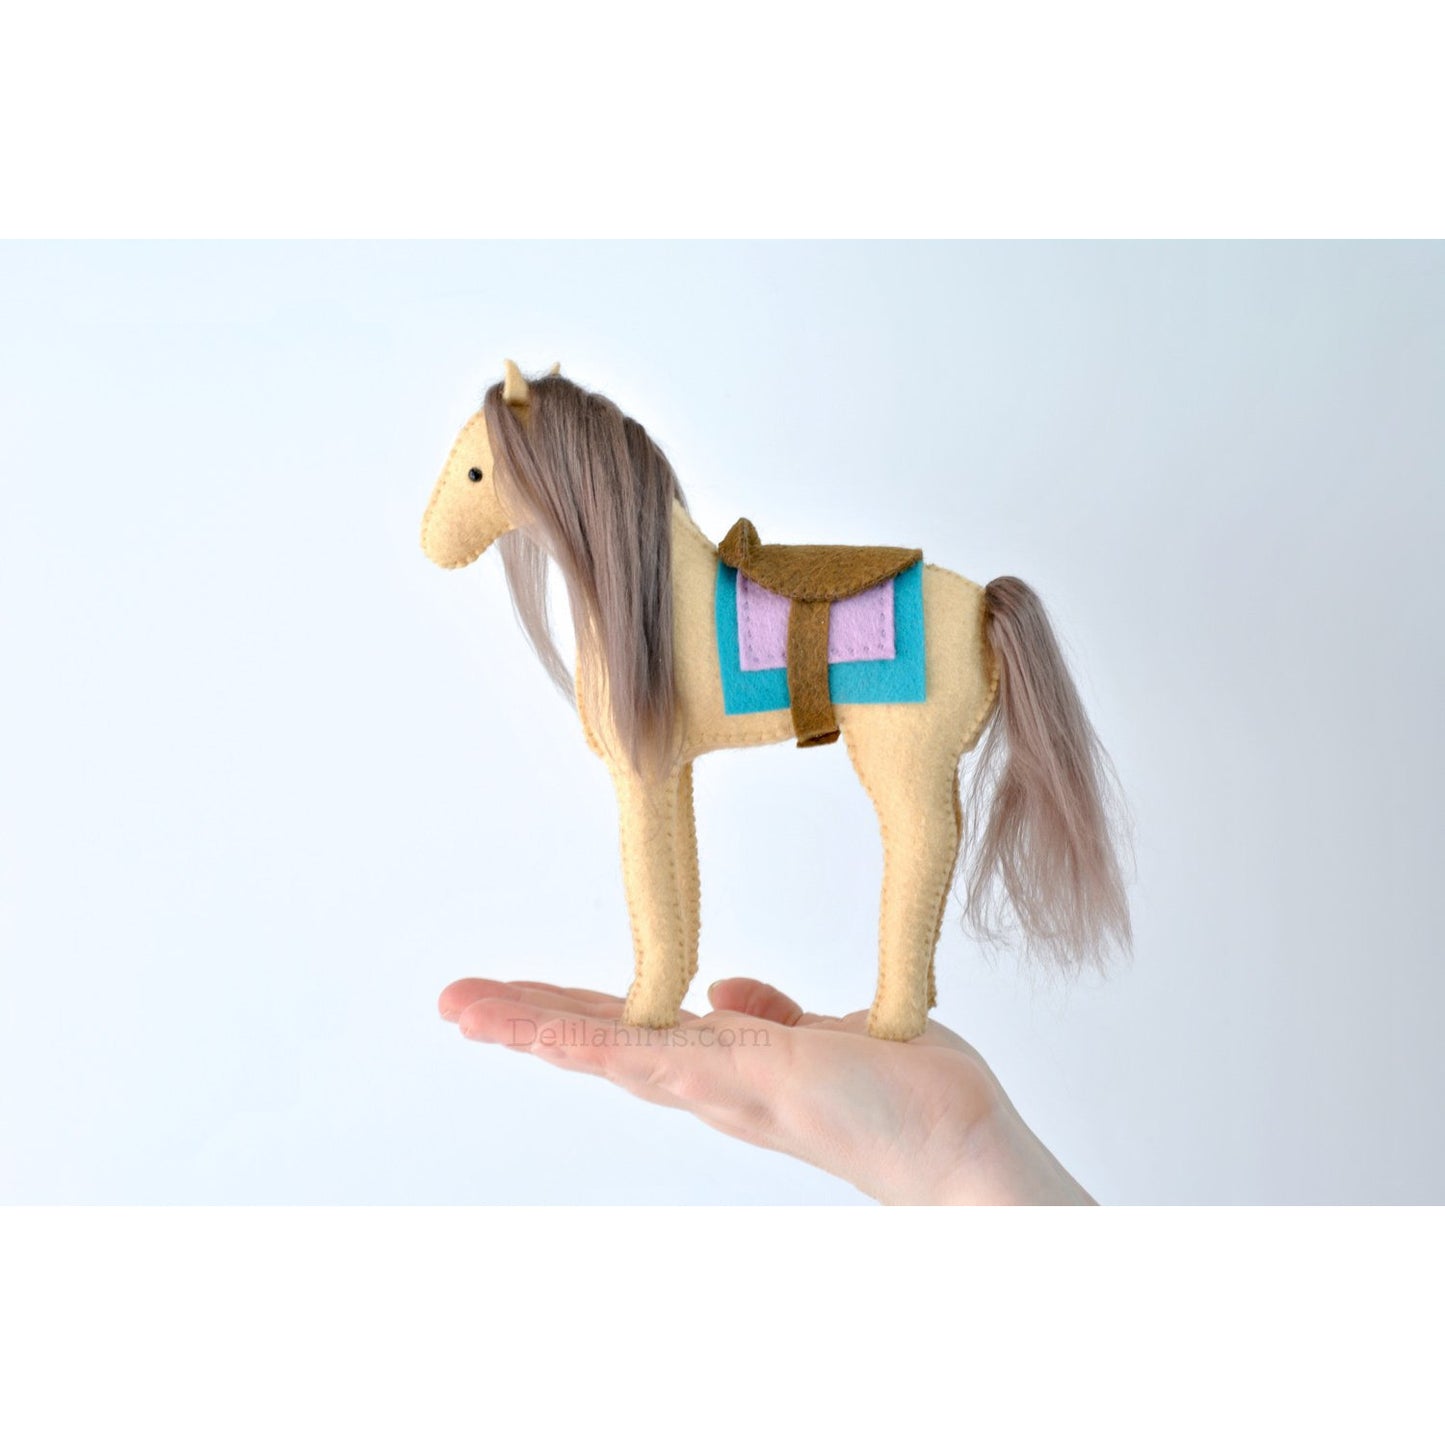 DelilahIris Designs ~ Felt Horse Sewing Kit